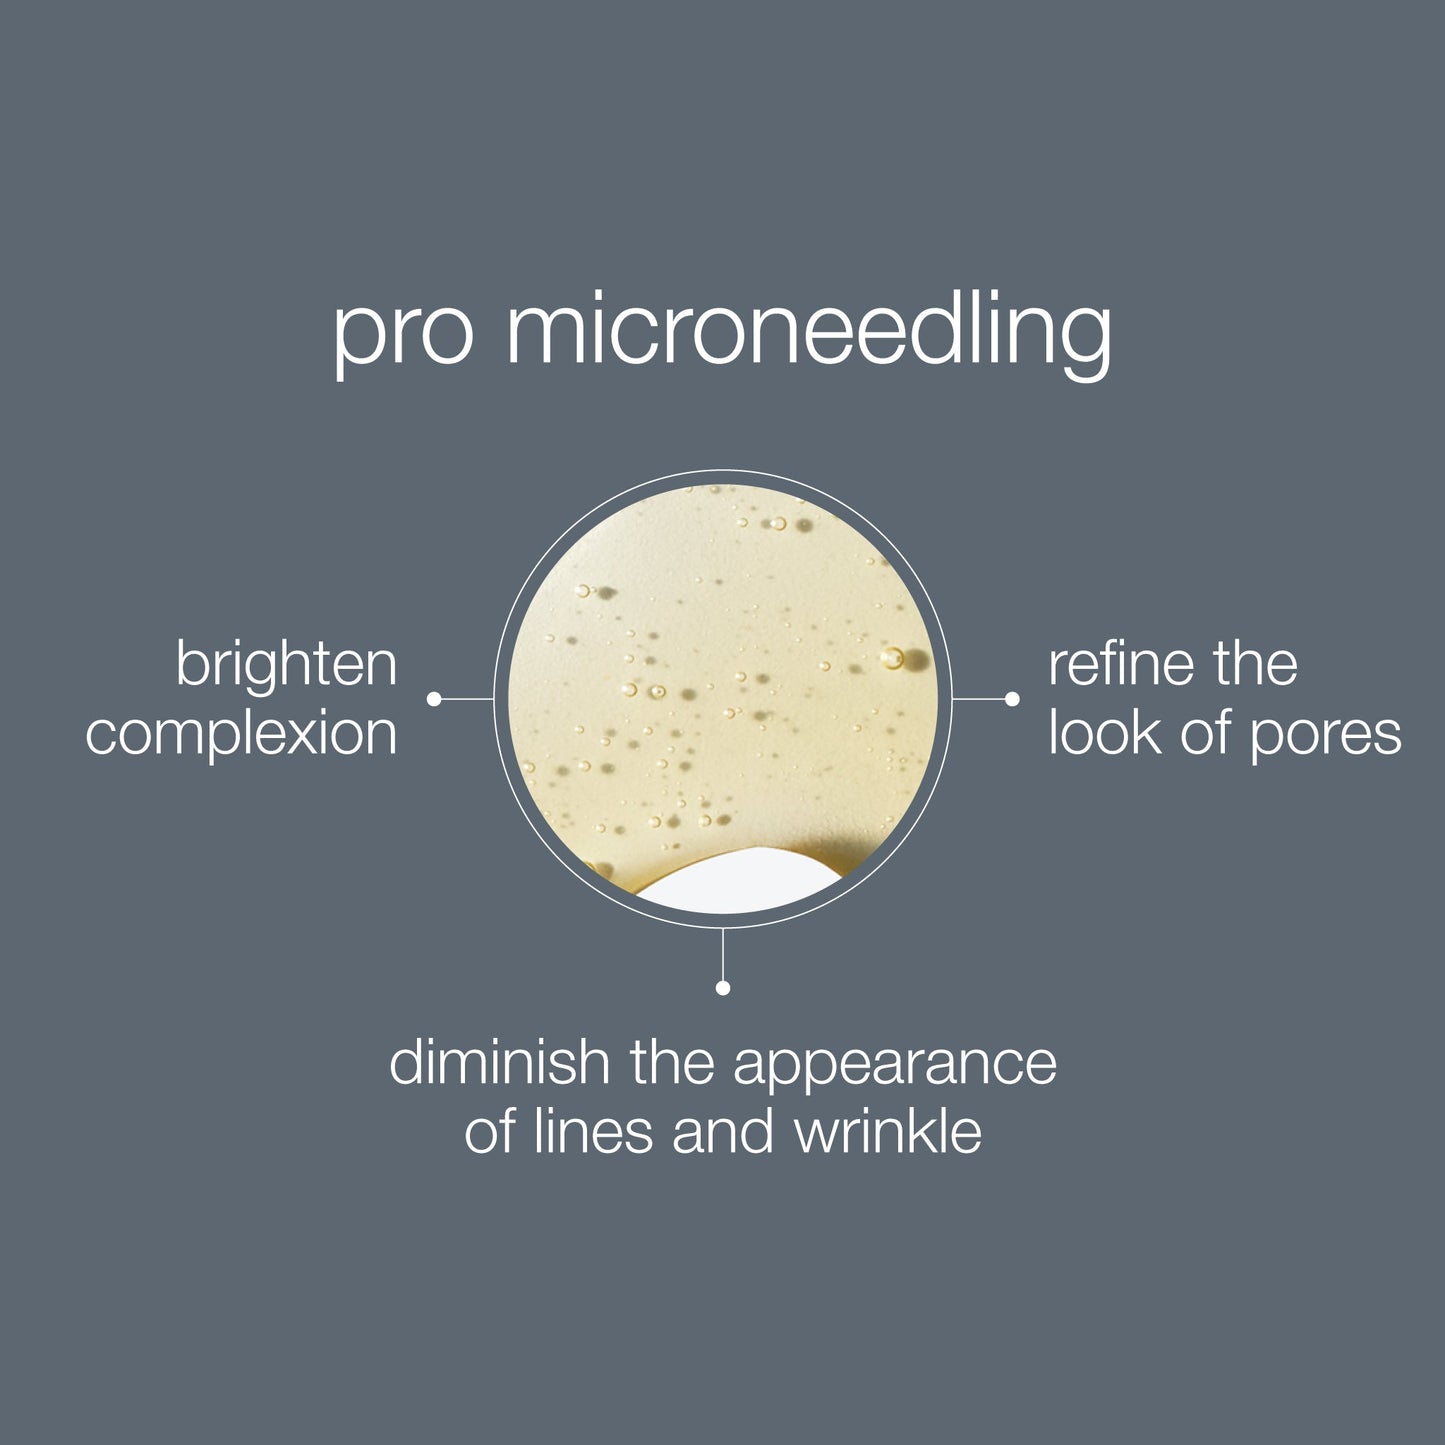 pro microneedling benefits